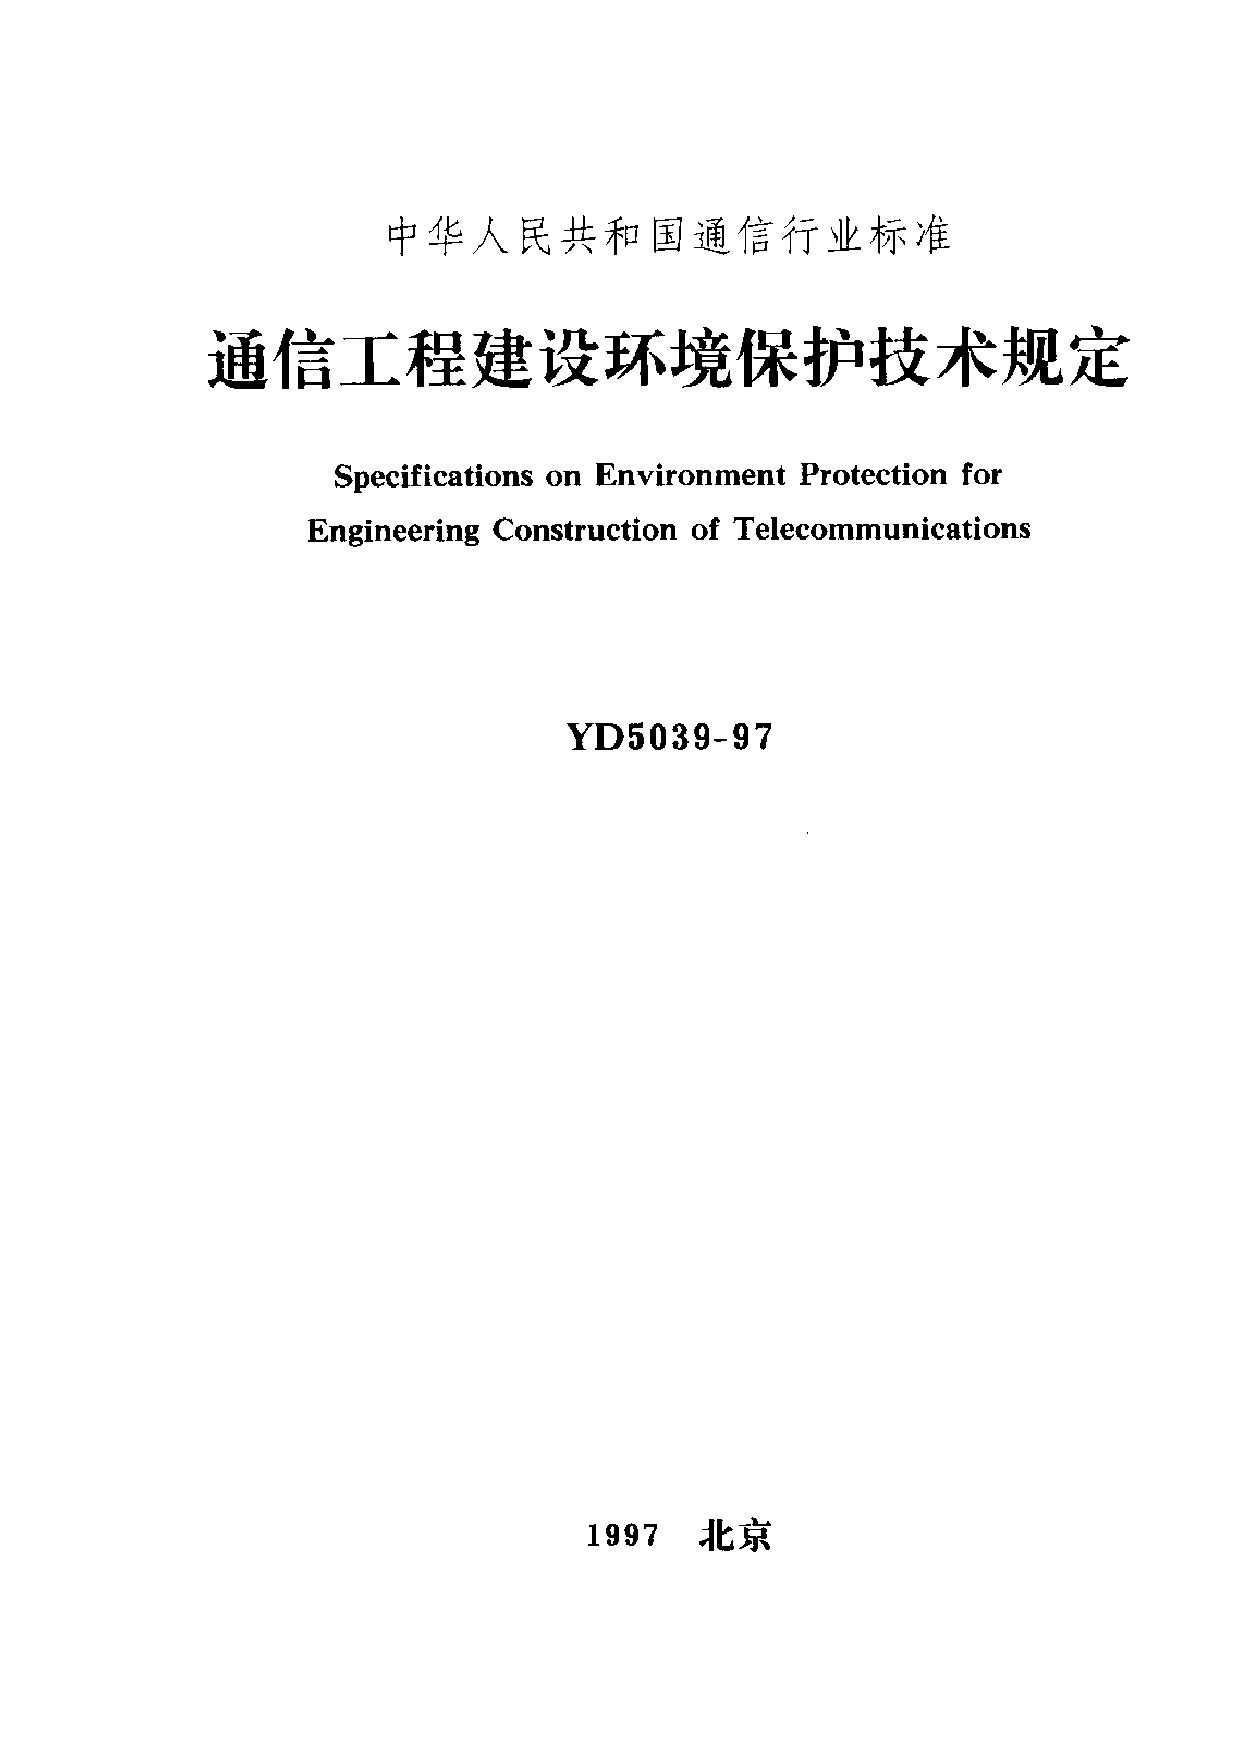 YD 5039-1997封面图